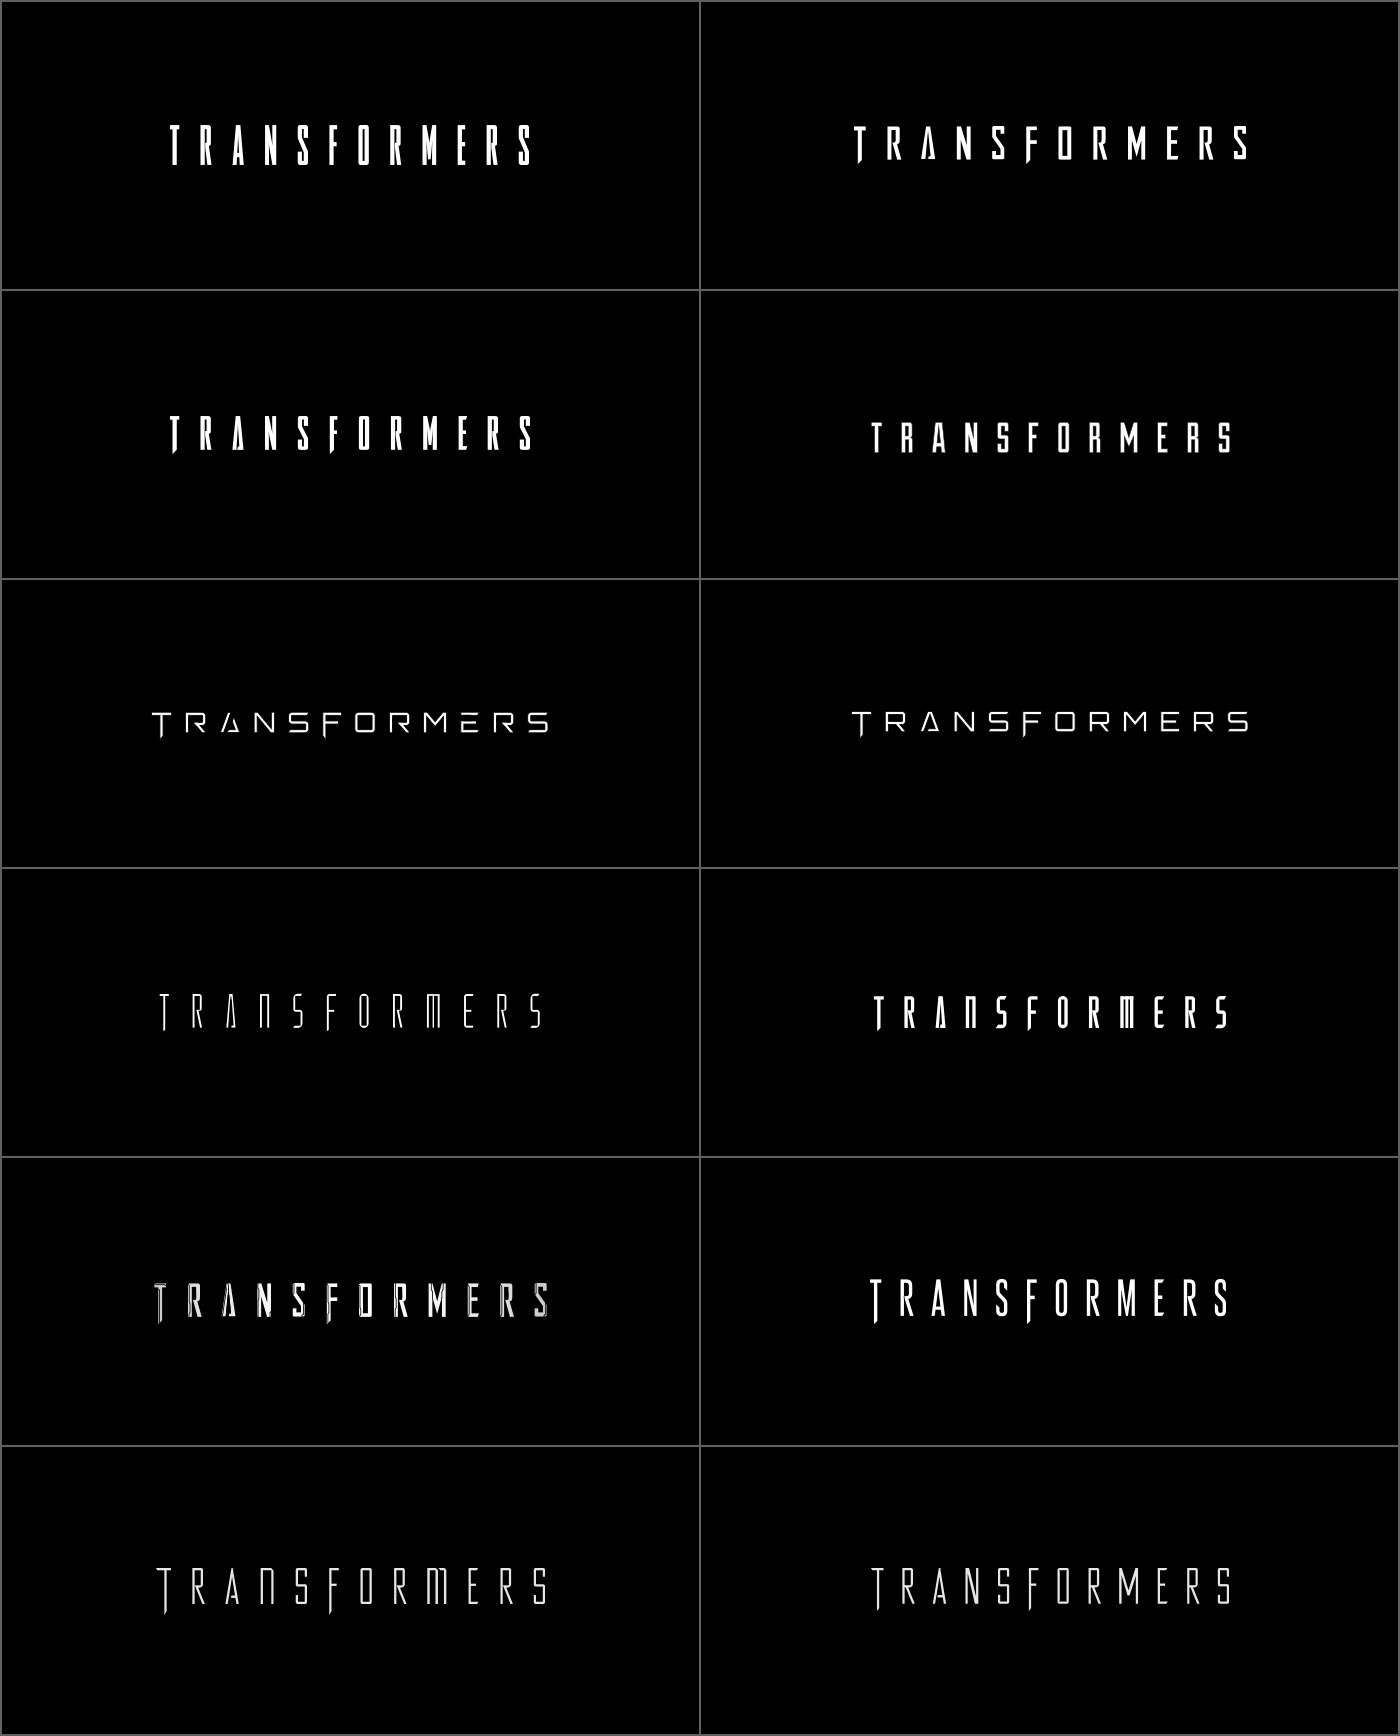 kris fortin transformers 4 main title logo design transformers 4 main title logo design